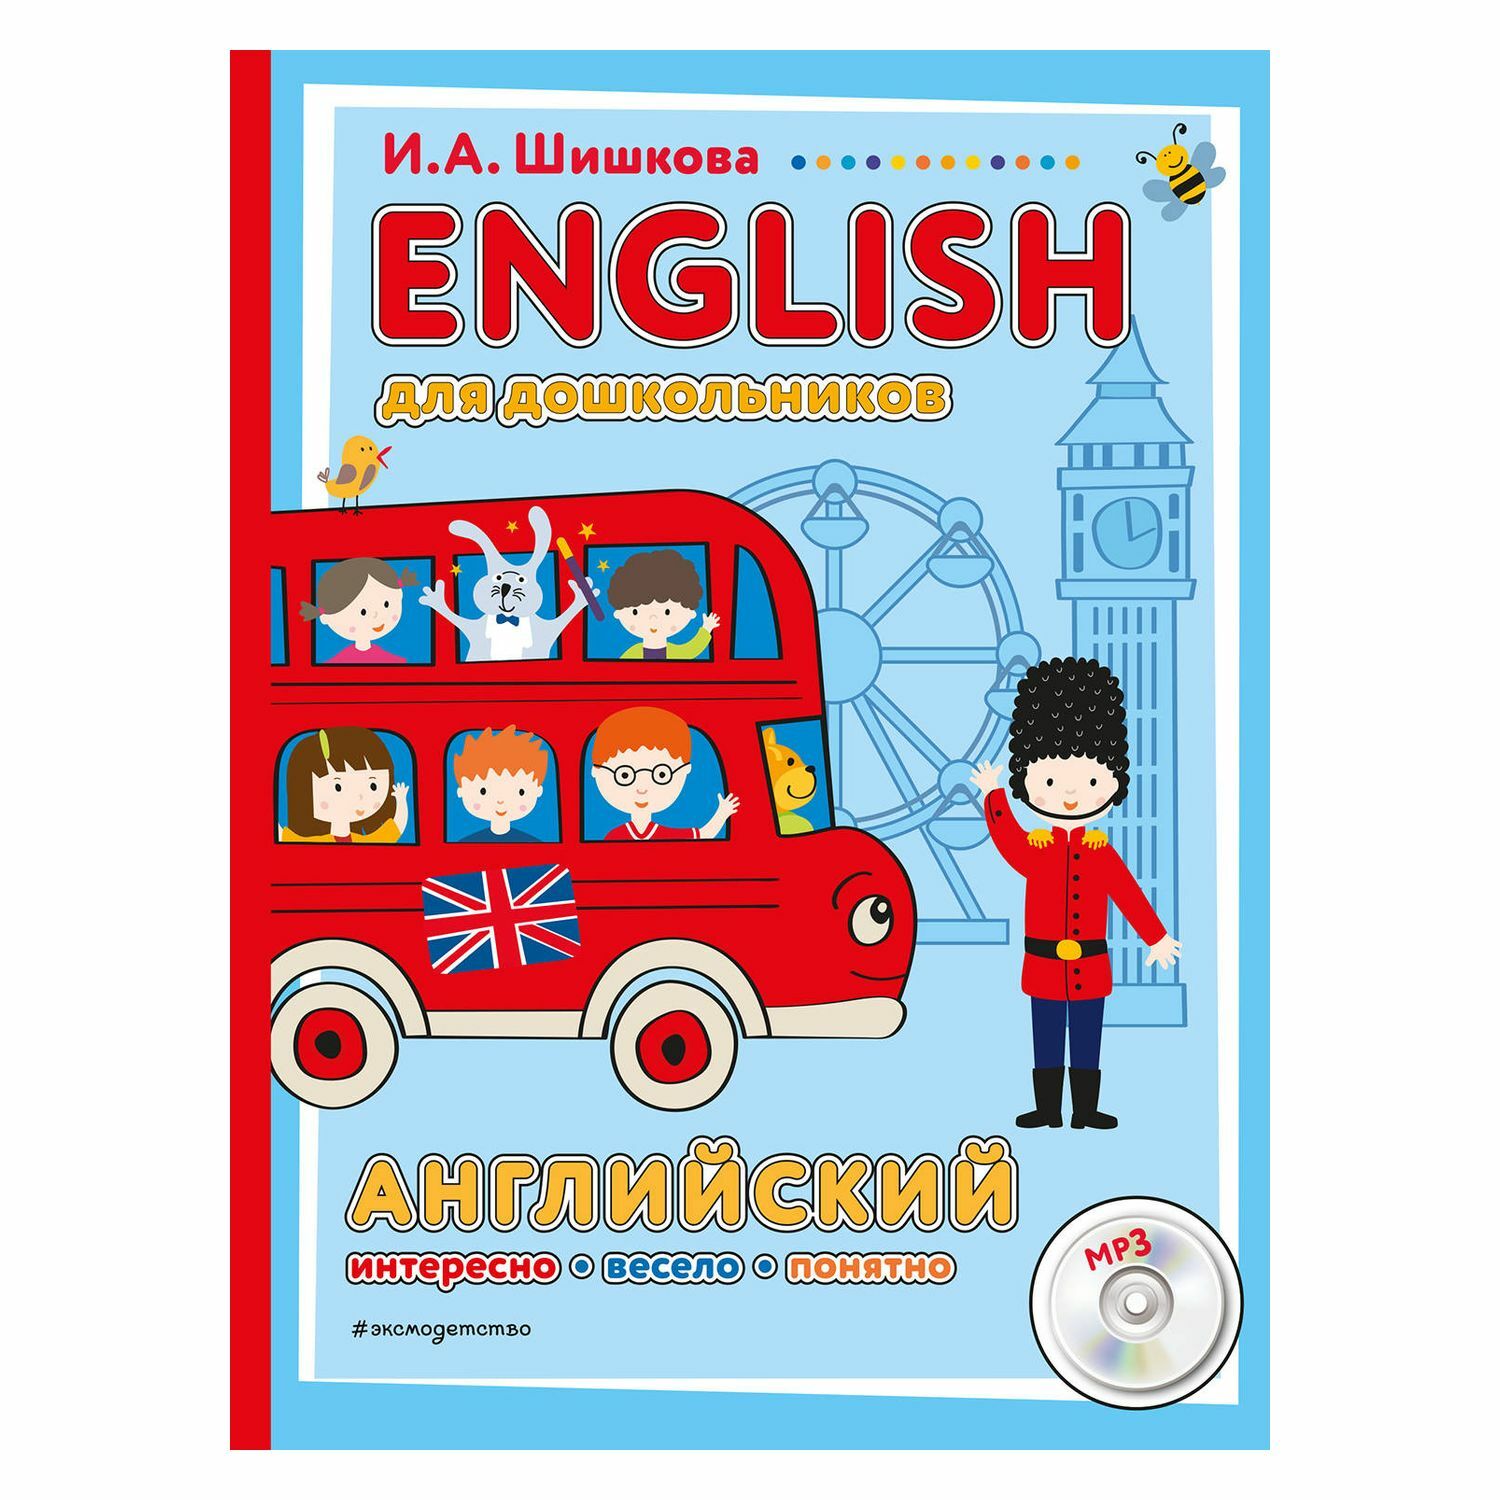 Книга Эксмо English для дошкольников компакт-диск mp3 - фото 1